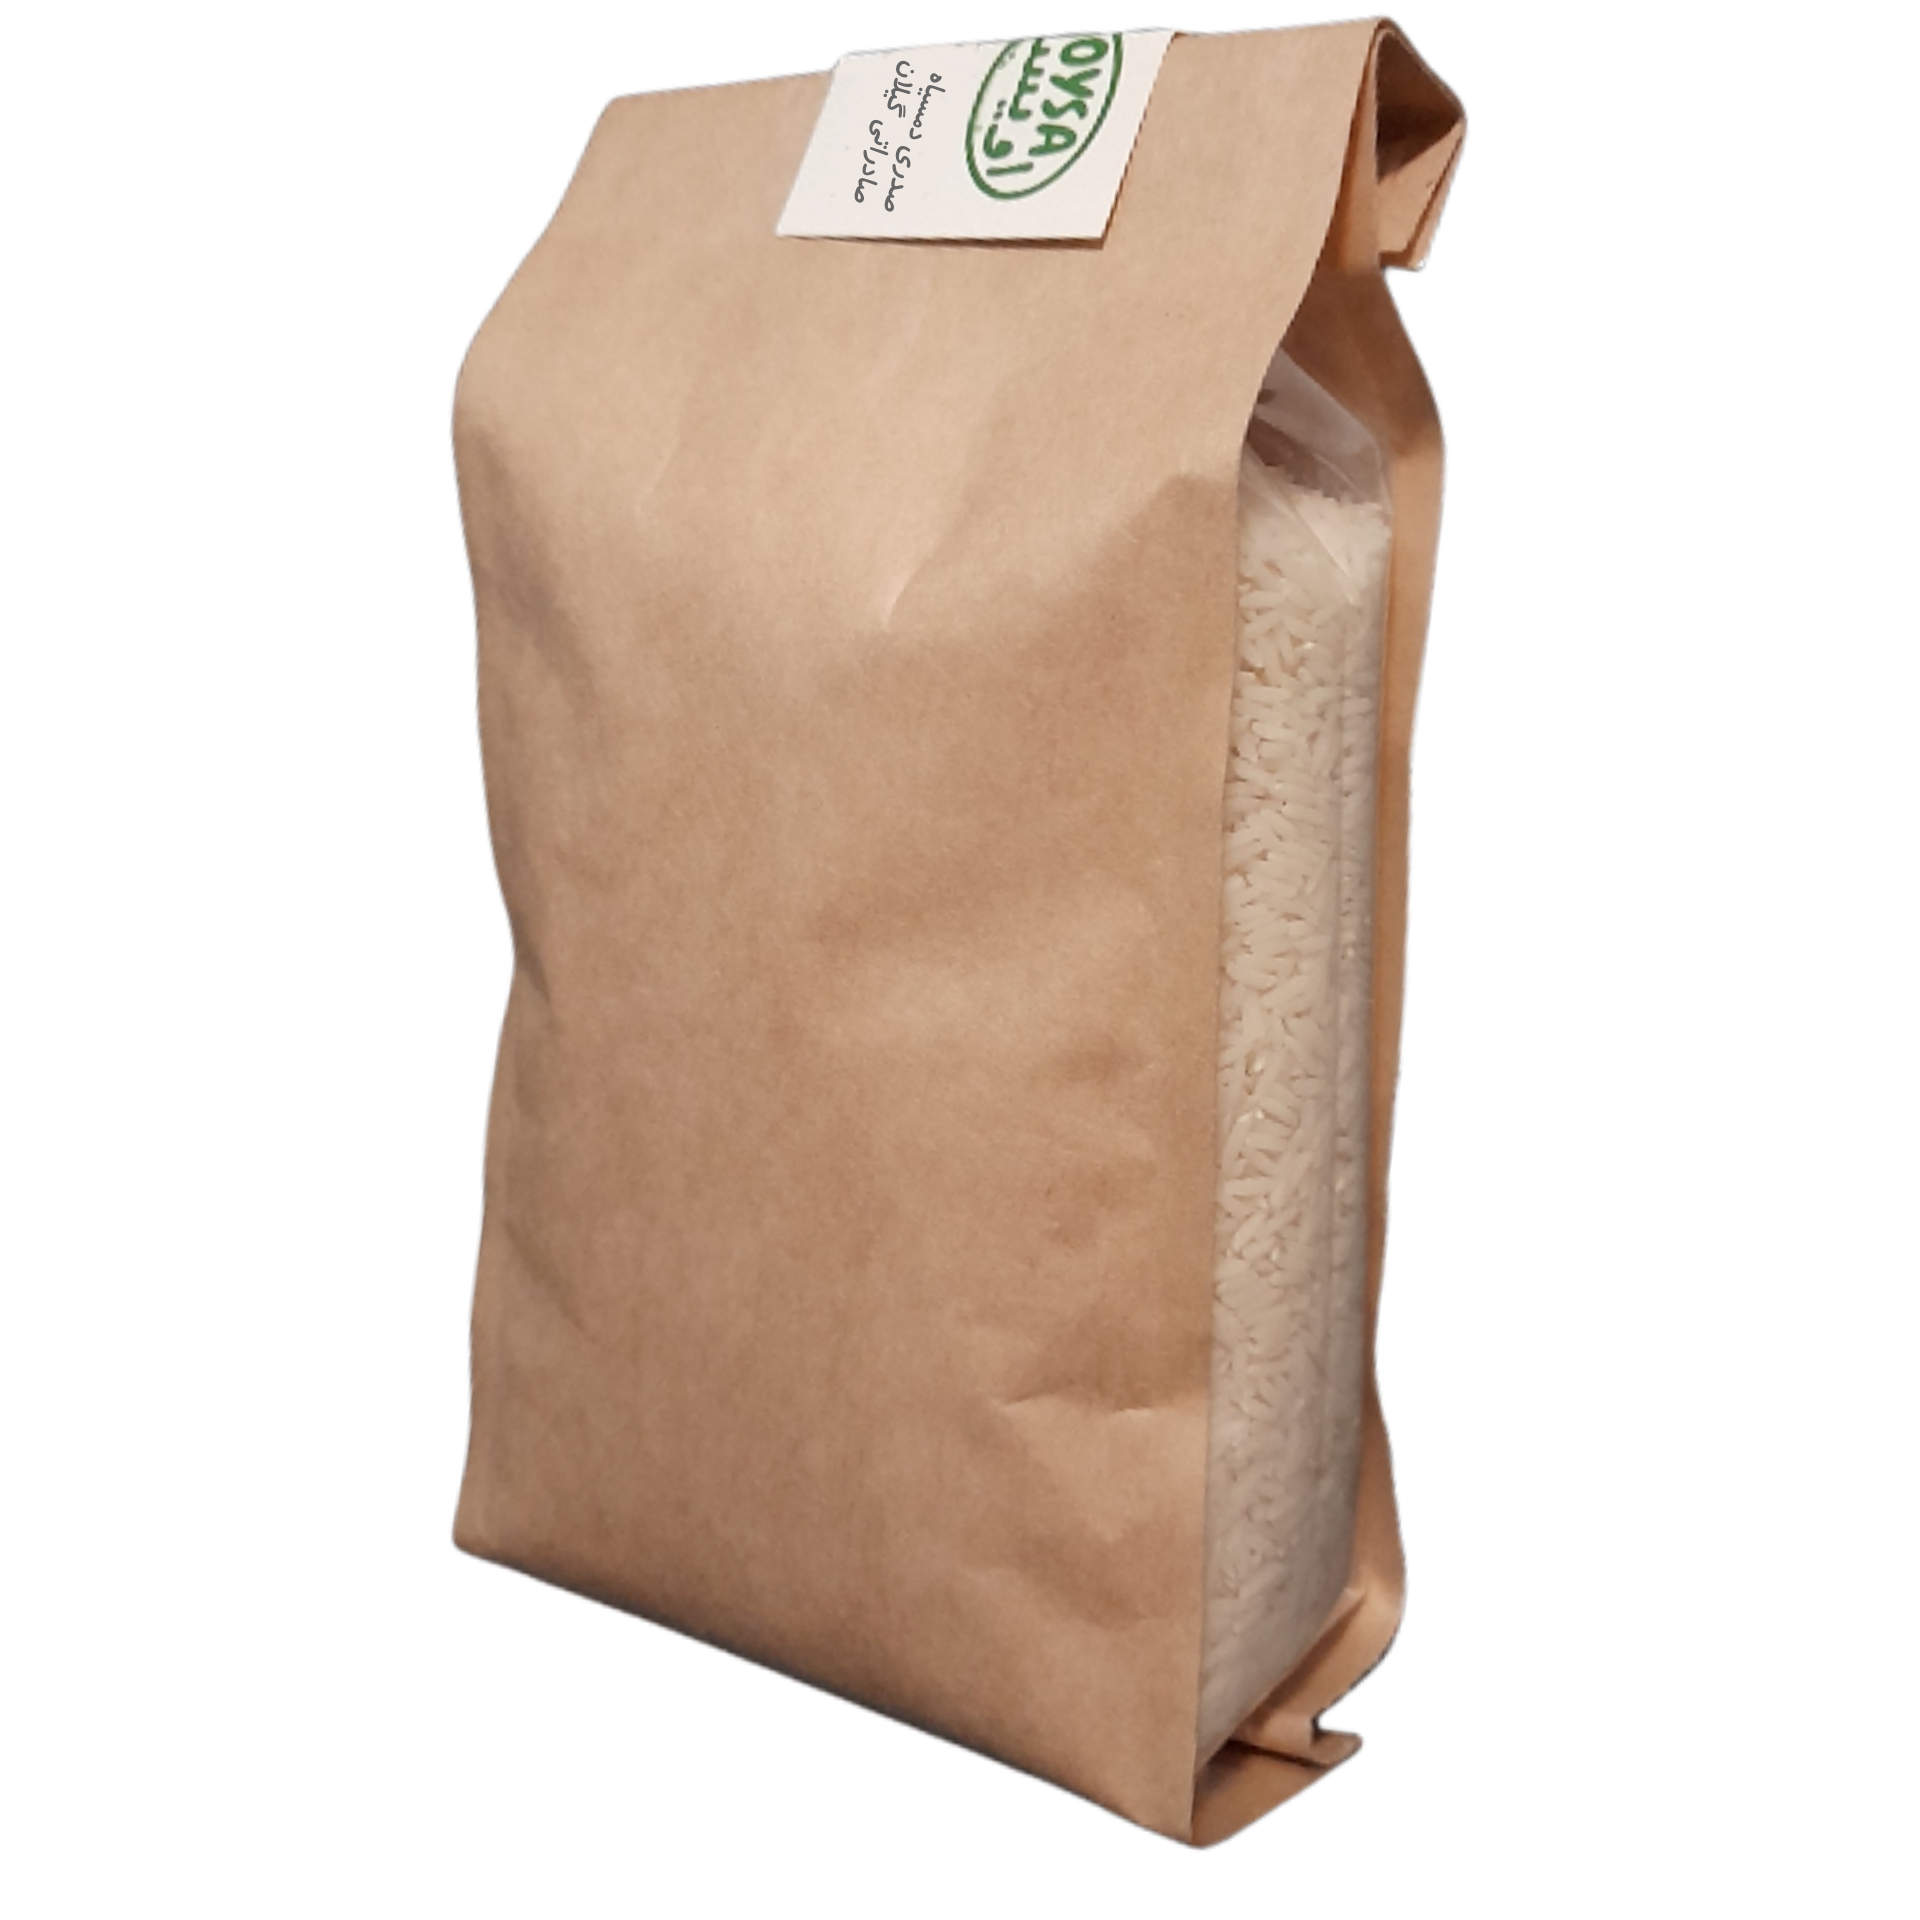 برنج صدری دم سیاه صادراتی گیلان اویسا - 1 کیلوگرم